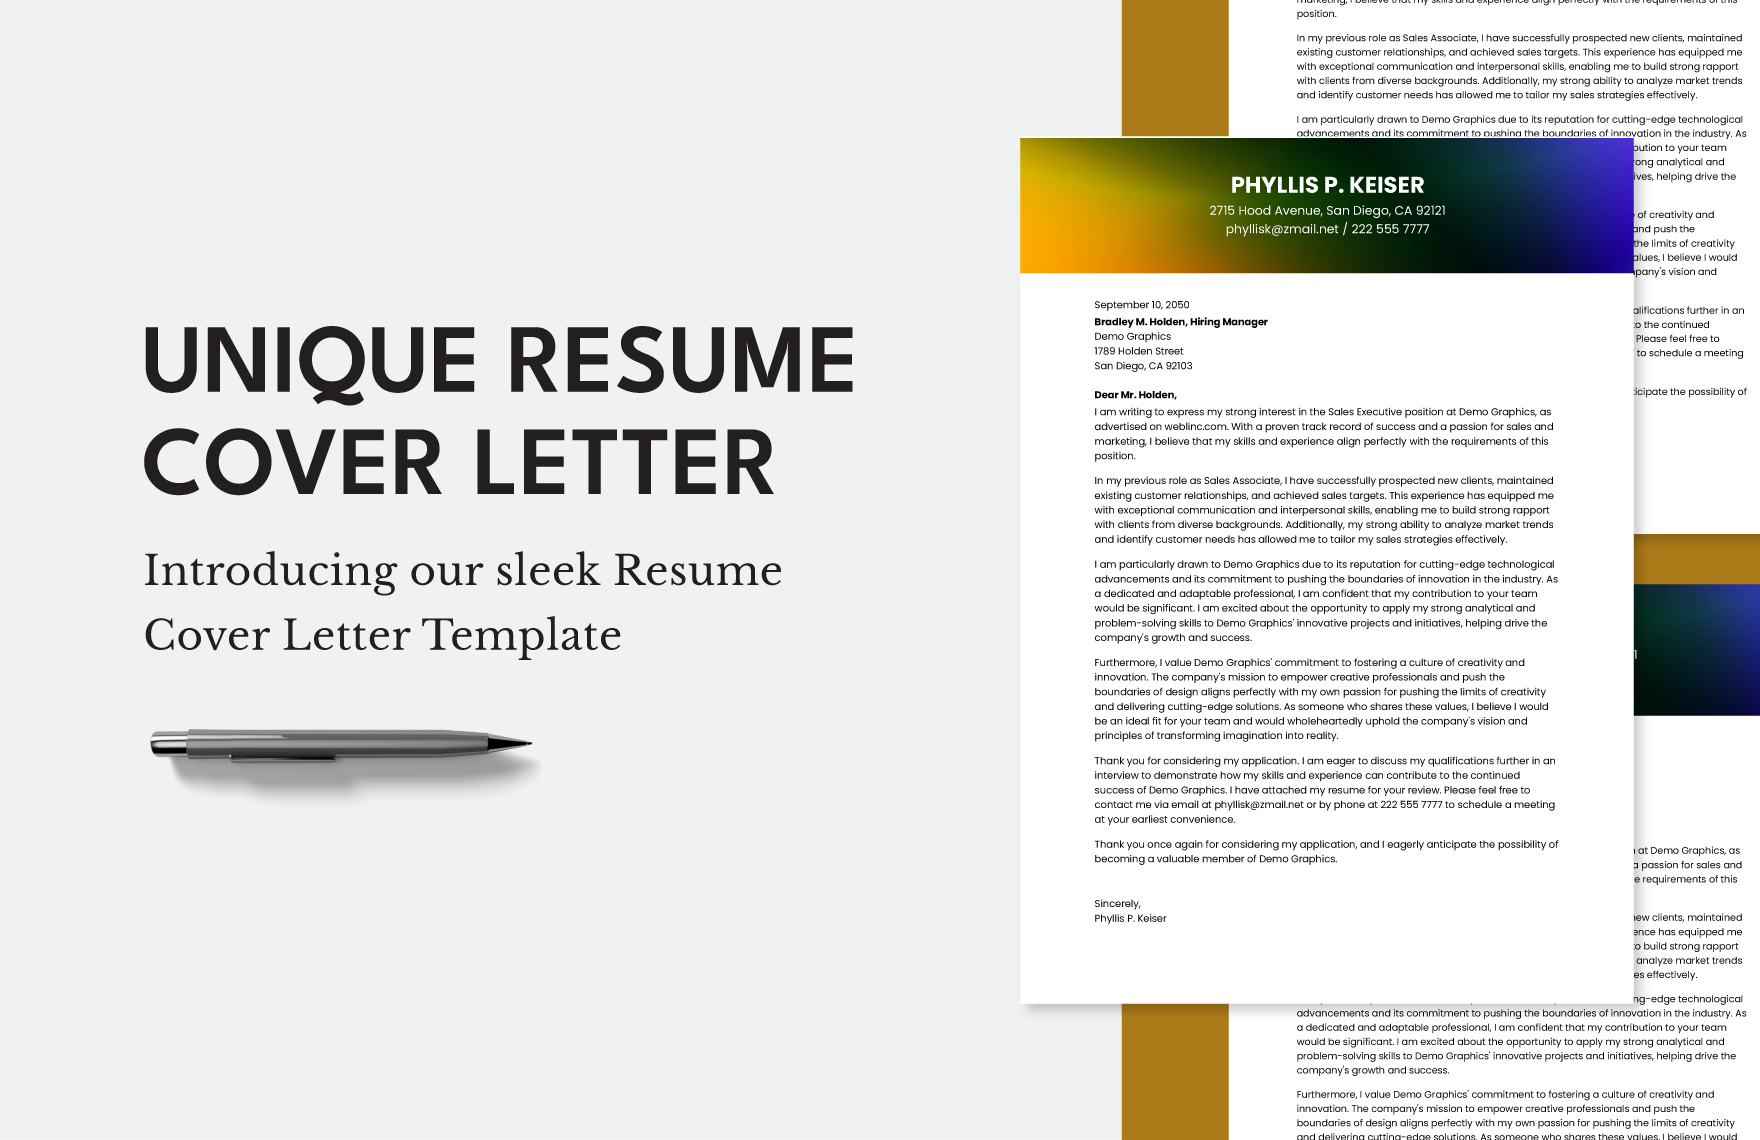 Unique Resume Cover Letter